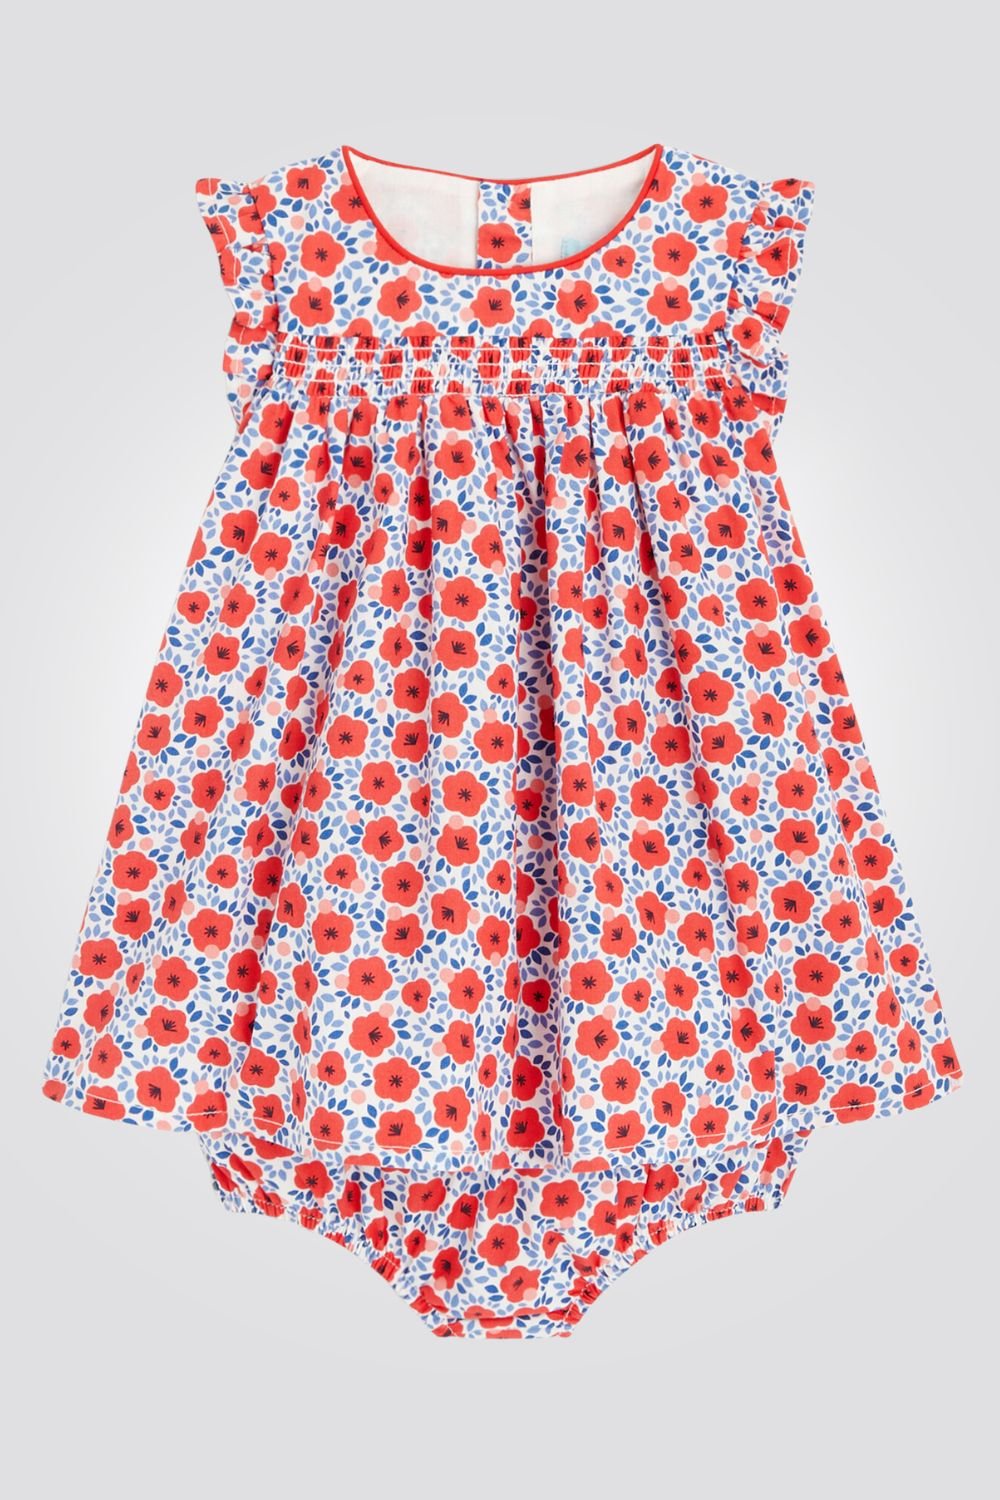 OBAIBI - שמלת תינוקות שרוול קצר הדפס פרחים אדומים על רקע תכלת - MASHBIR//365